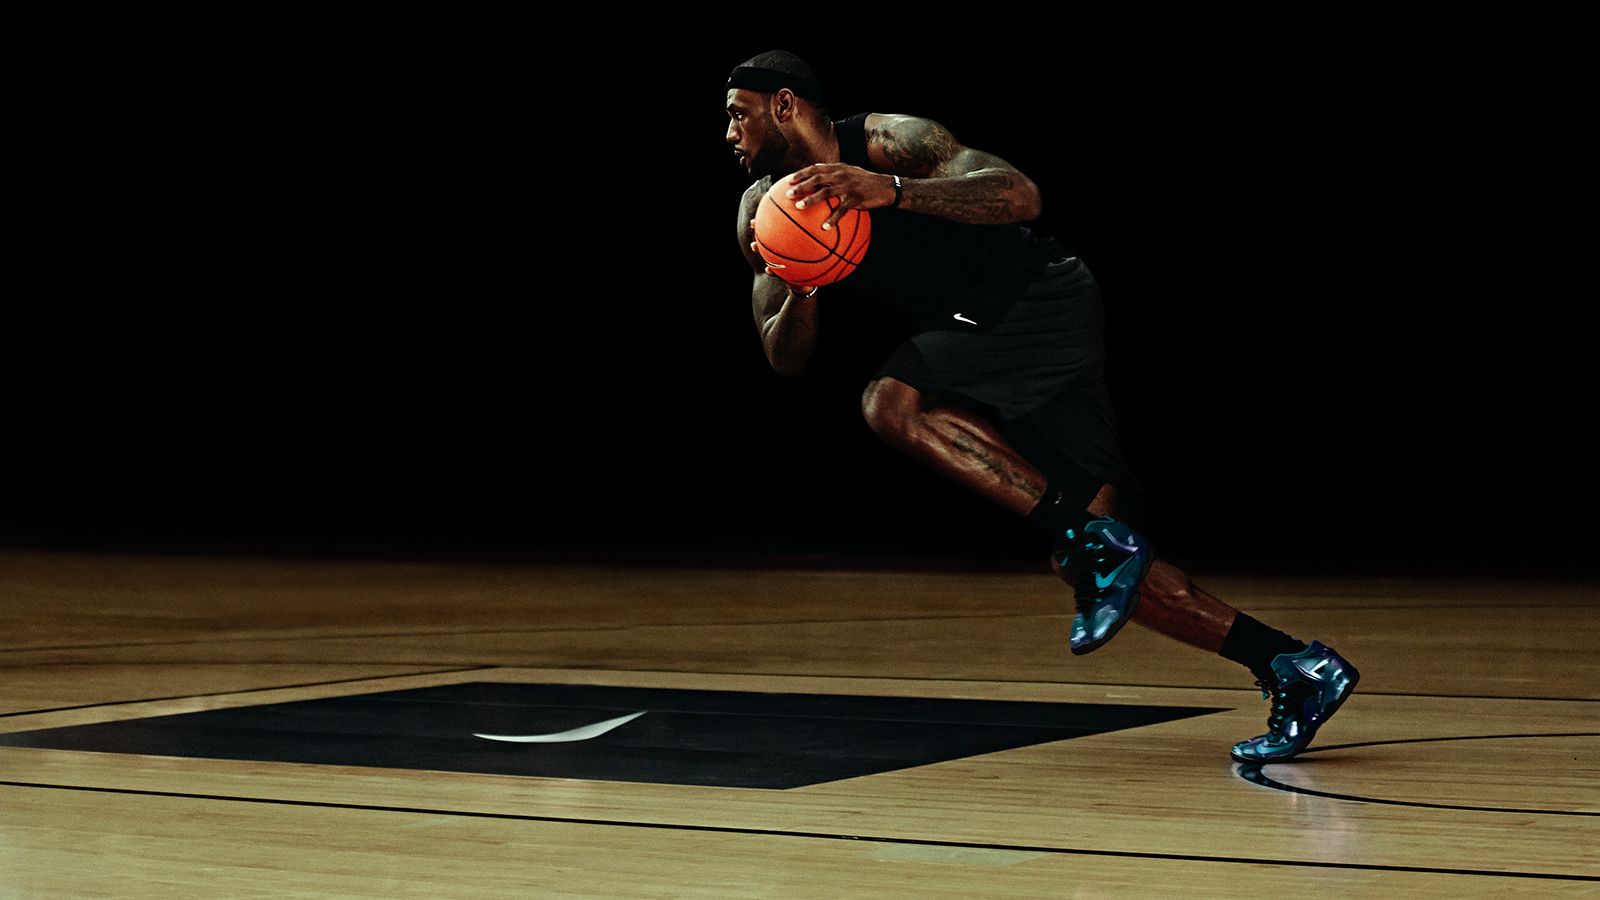 Basketball Nike Shoes Air Wallpaper Image